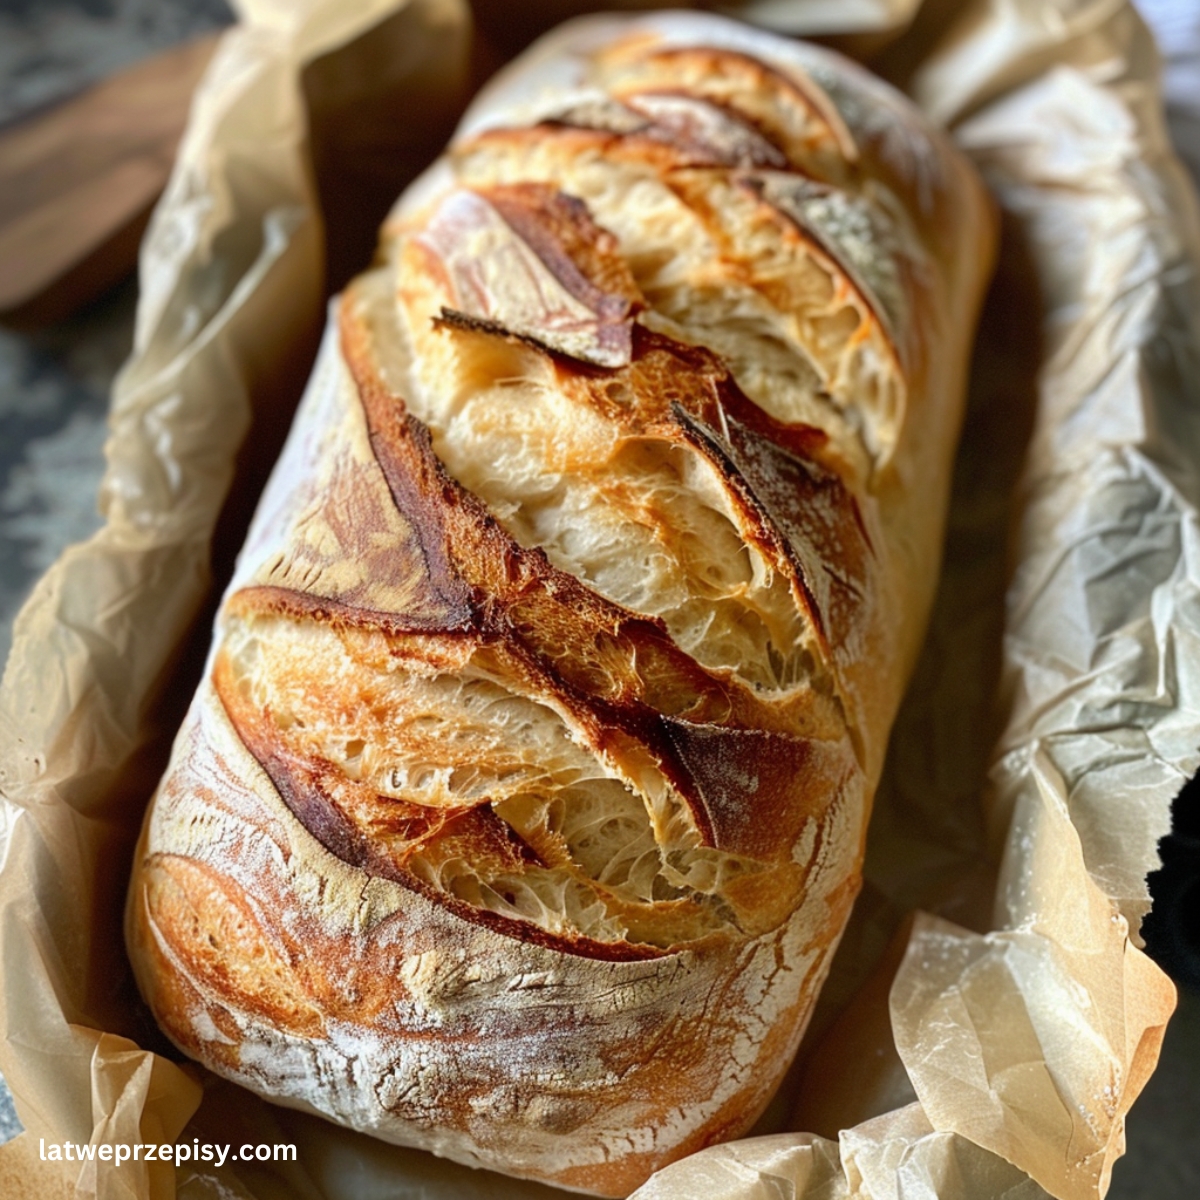 Chleb francuski, podany w blaszce